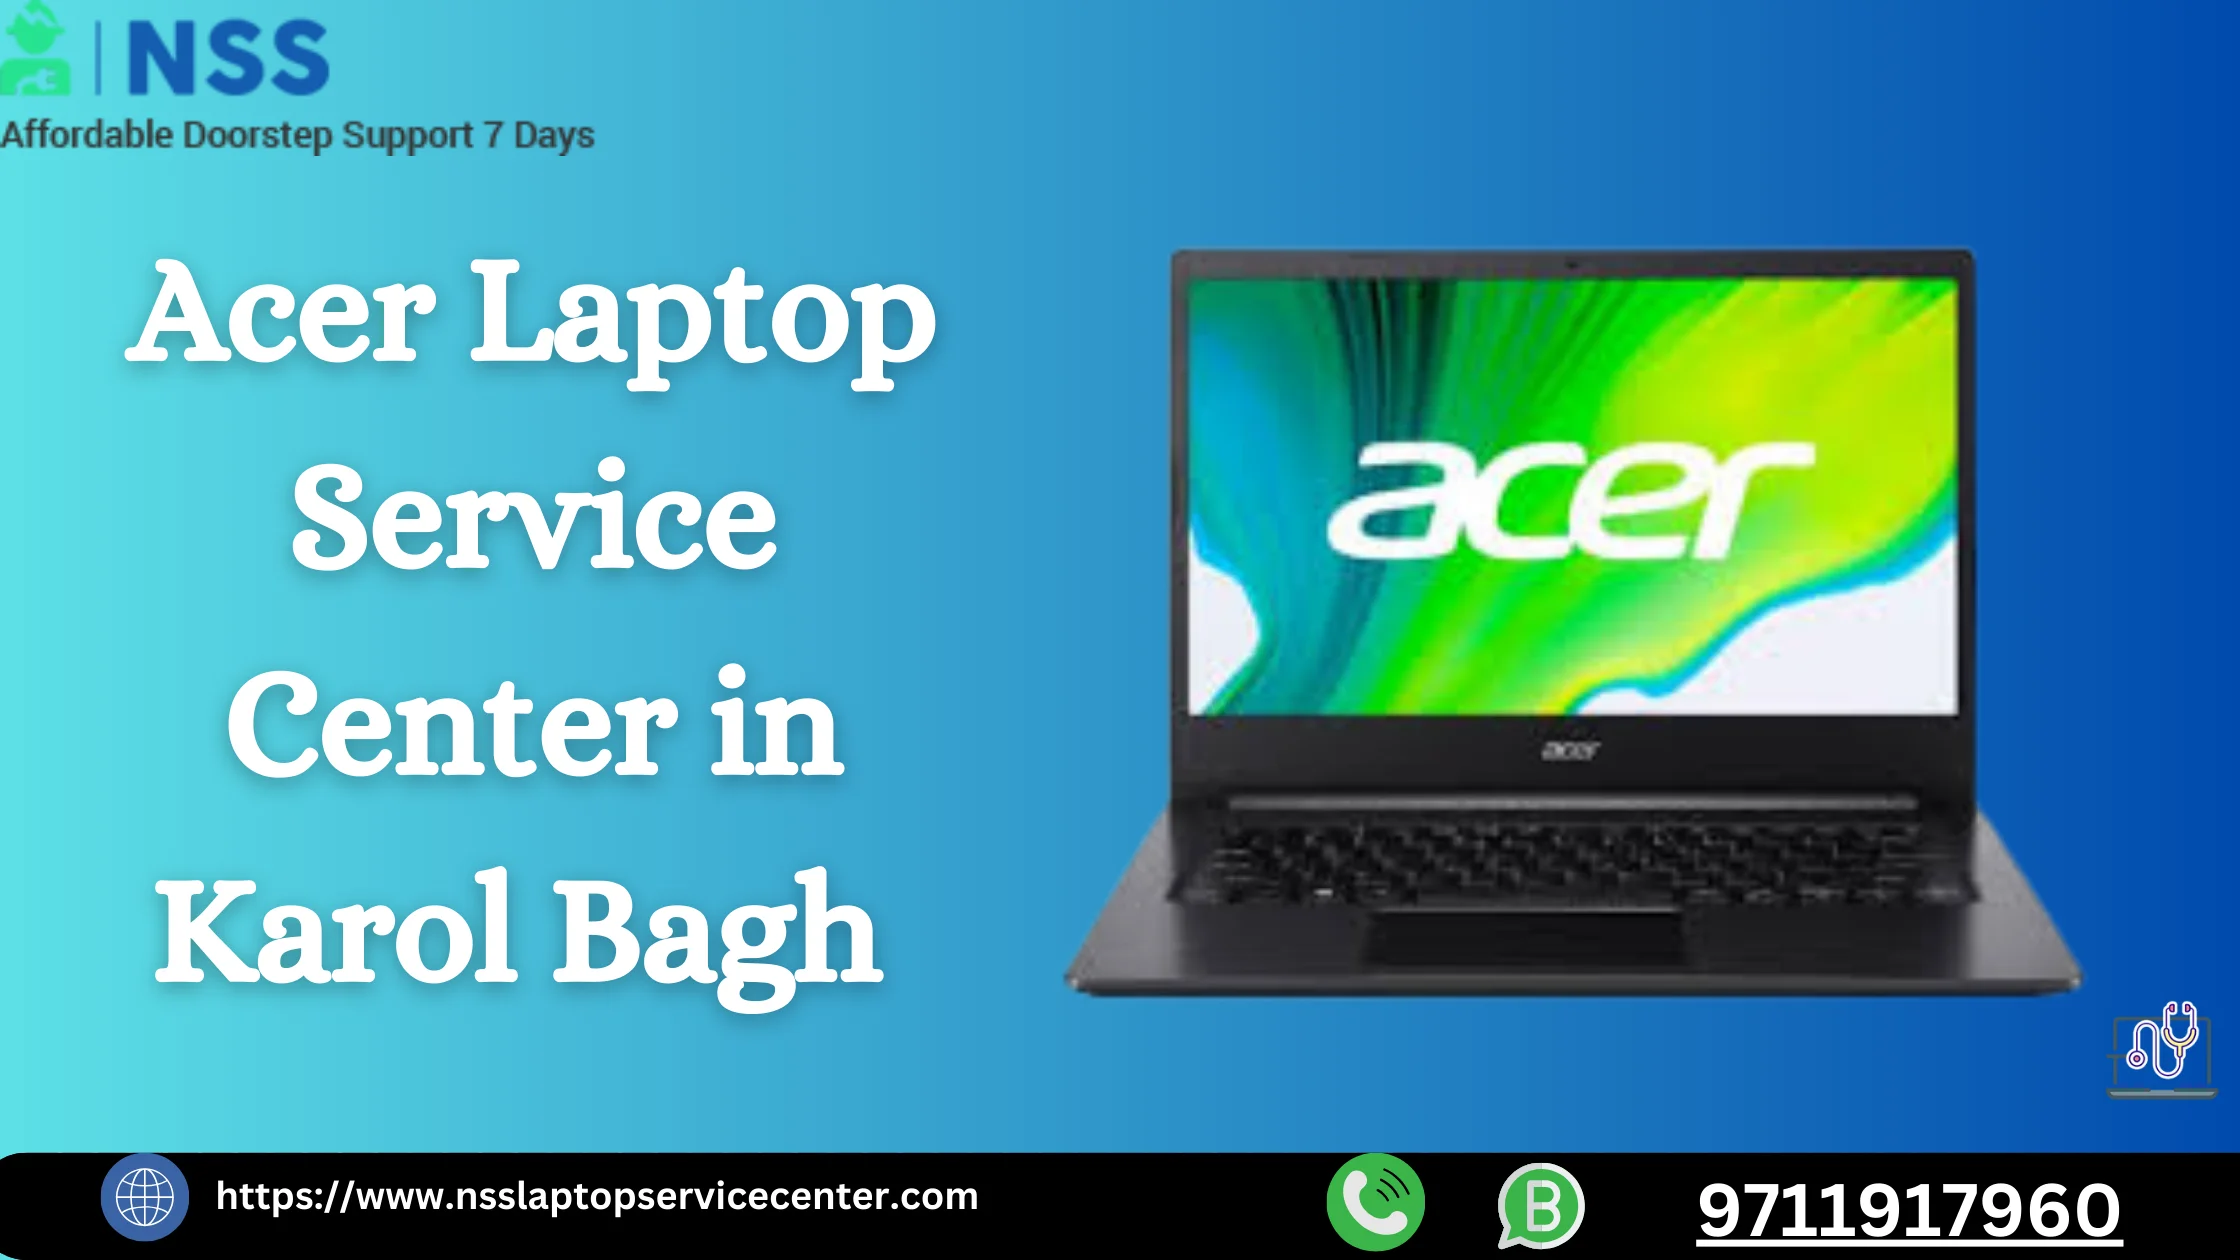 Acer Laptop Service Center in Karol Bagh Near Delhi